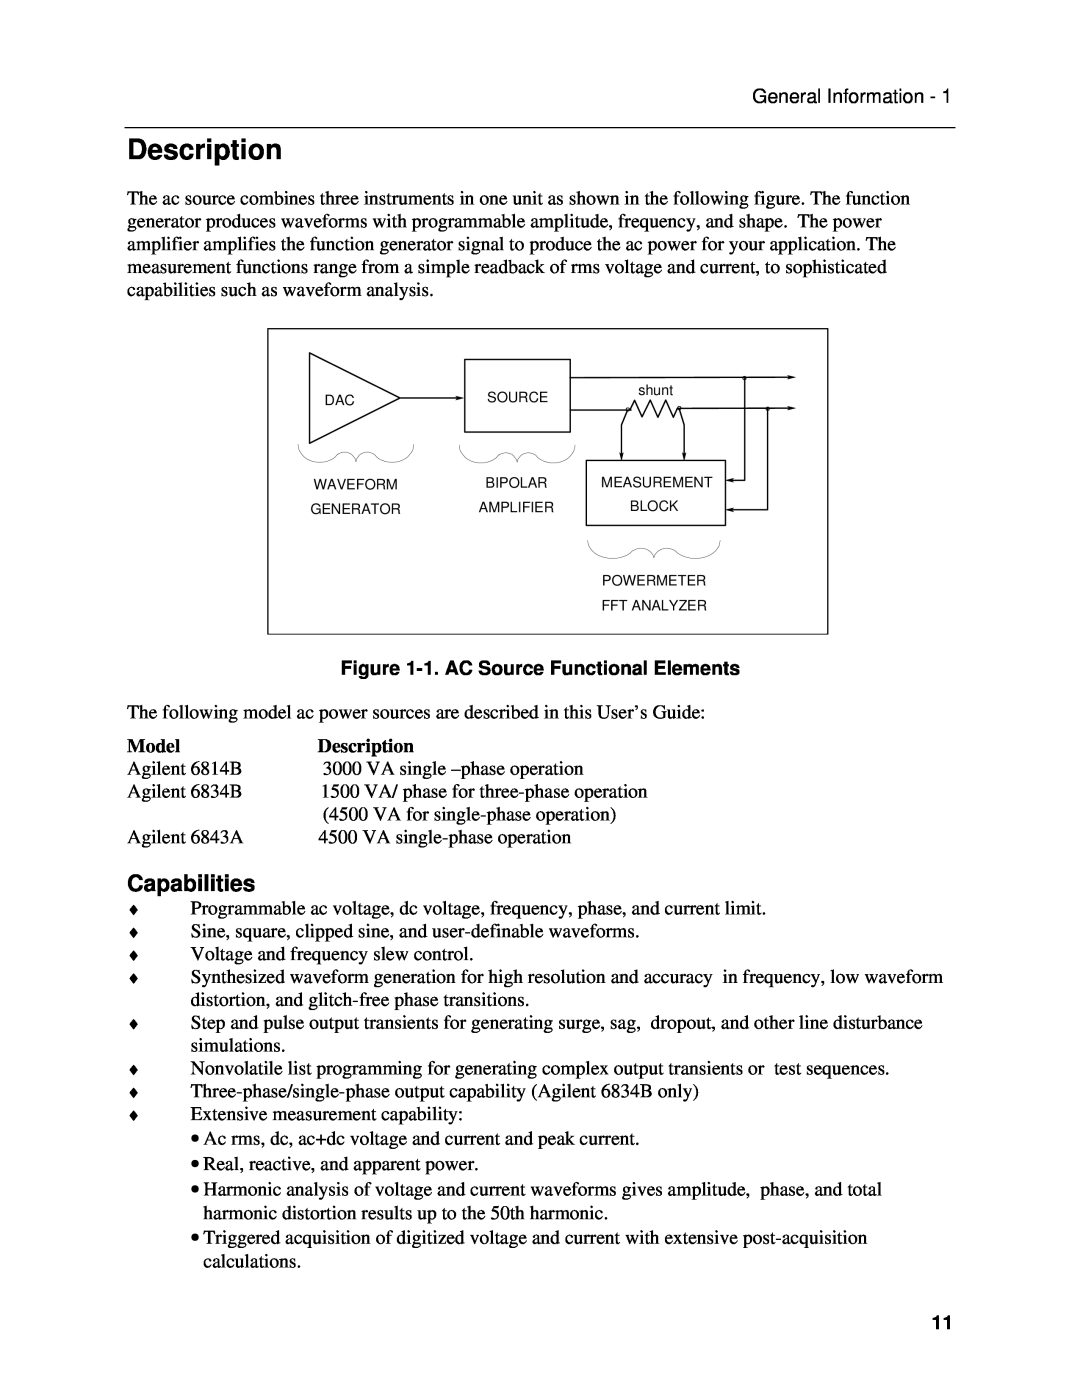 Agilent Technologies 6843A, 6834B, 6814B manual Description, Capabilities, 1.AC Source Functional Elements, Model 